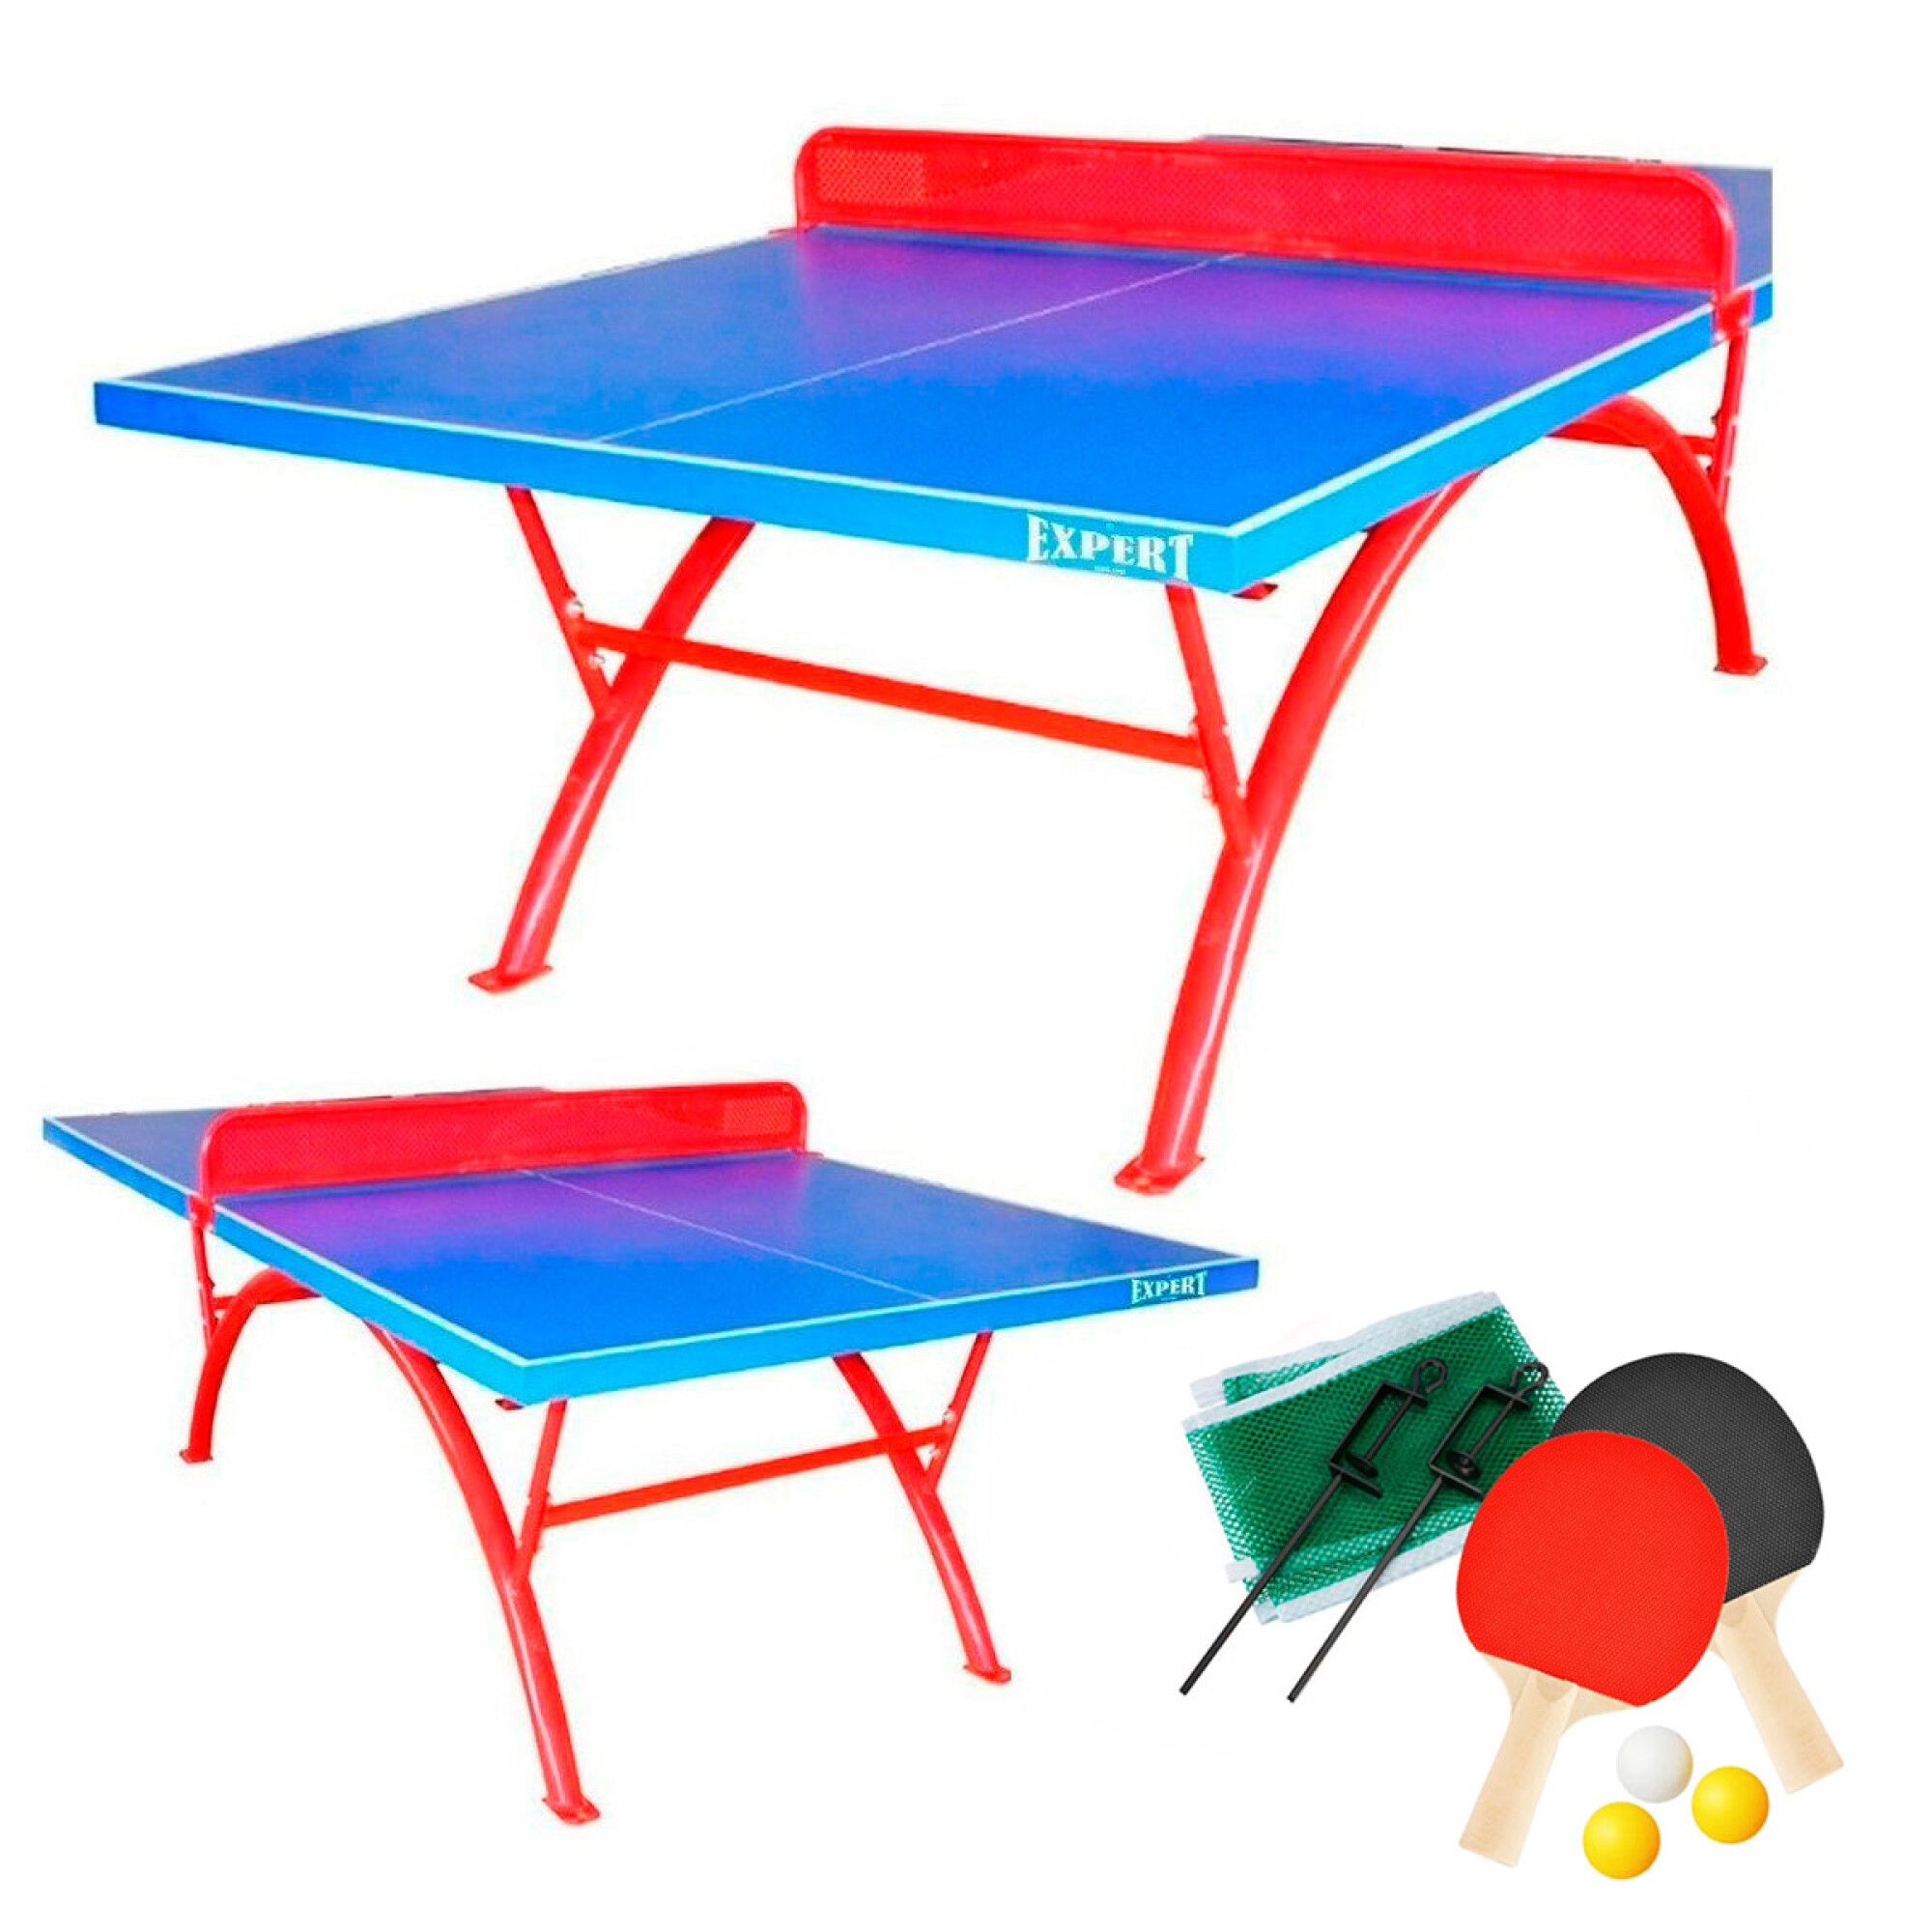 TQ Mesa Ping Pong - Reglamentaria para exterior